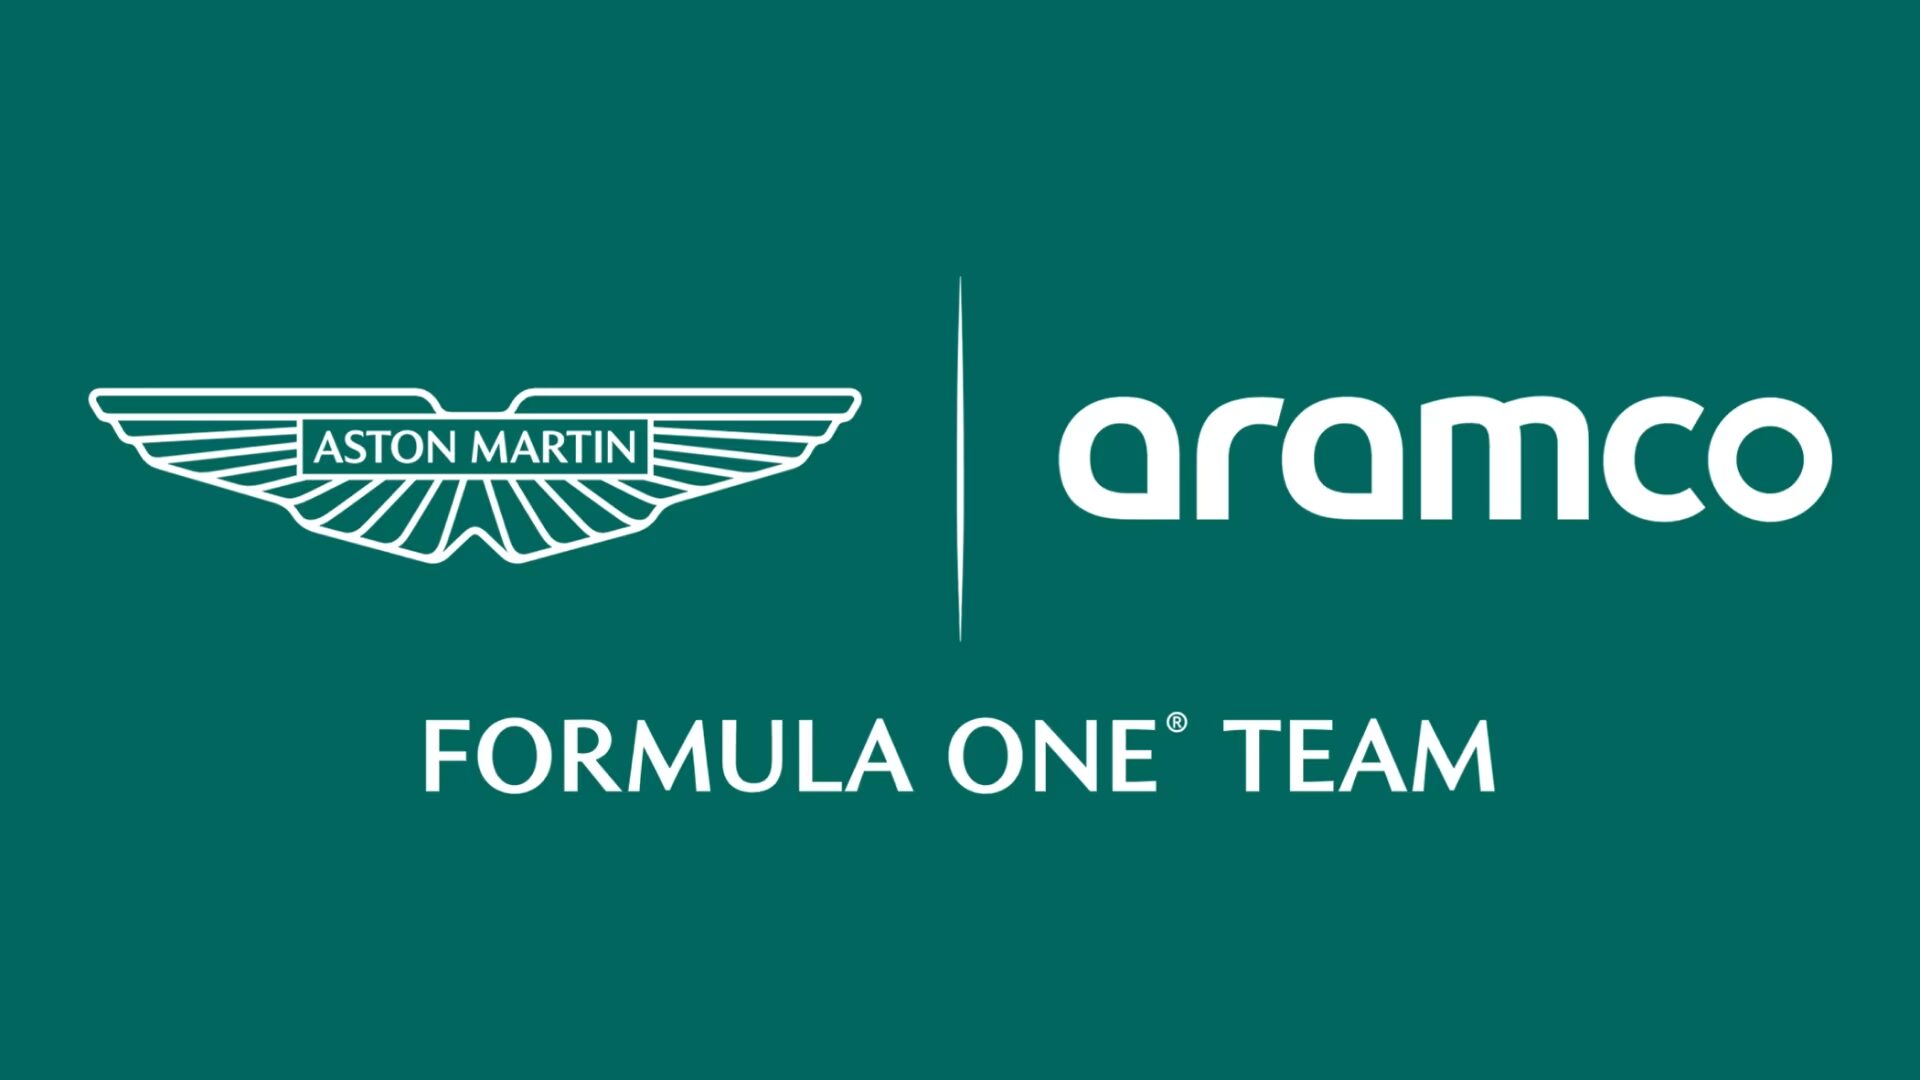 Aston Martin team logo